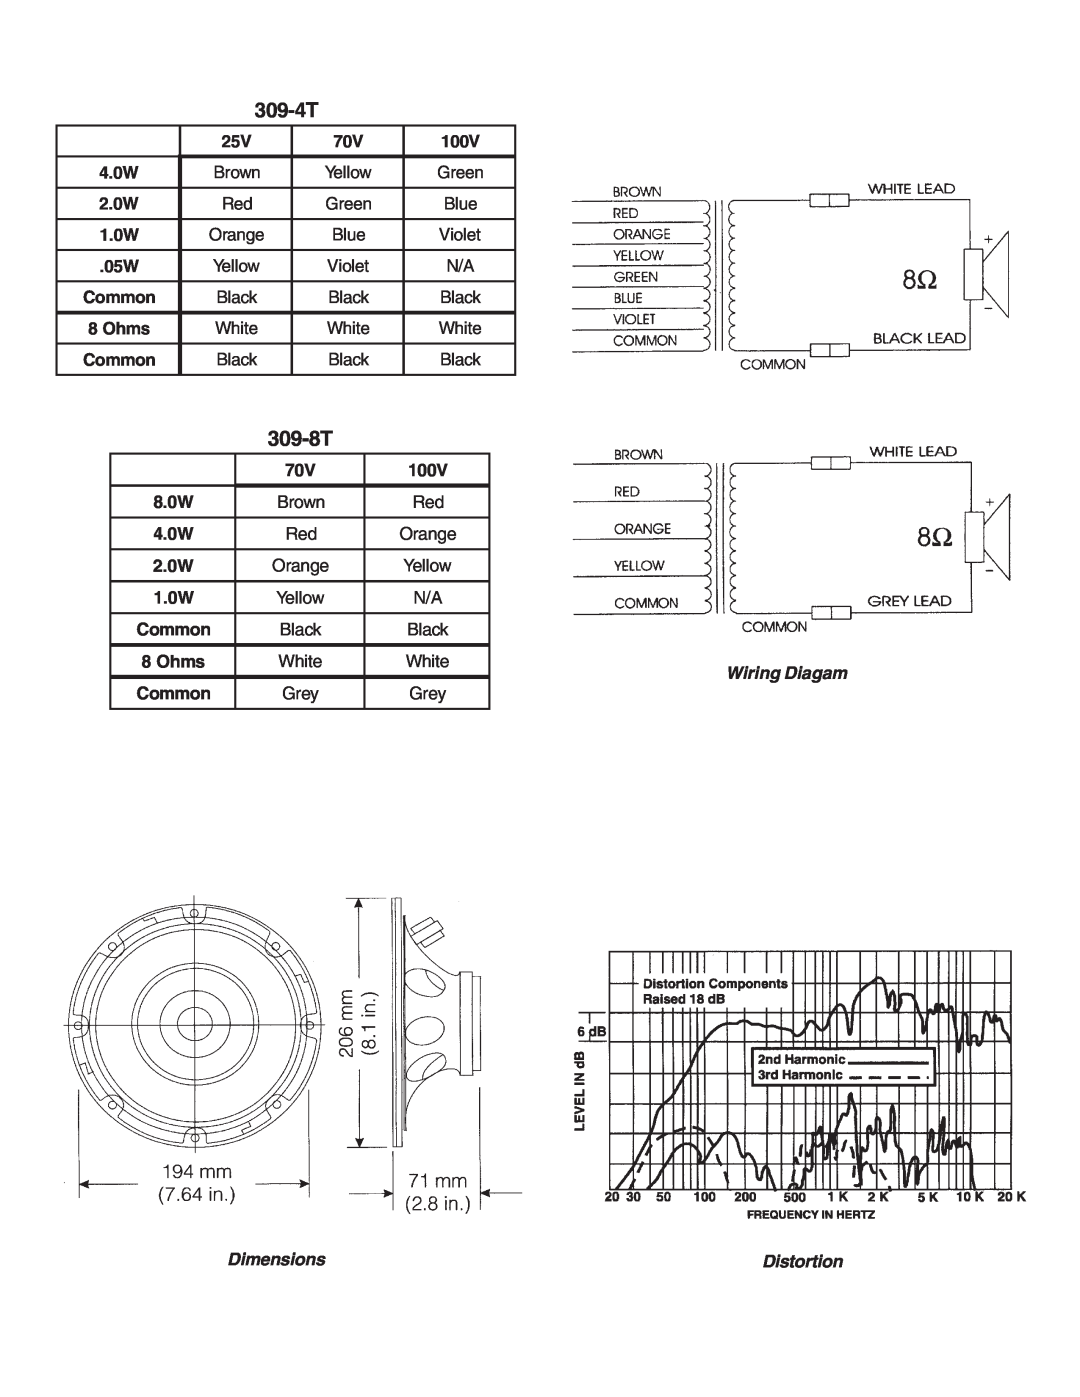 Telex 309 series specifications 309-4T, 309-8T, Dimensions, Distortion, 100V, 4.0W, Ohms, 8.0W, 1.0W 